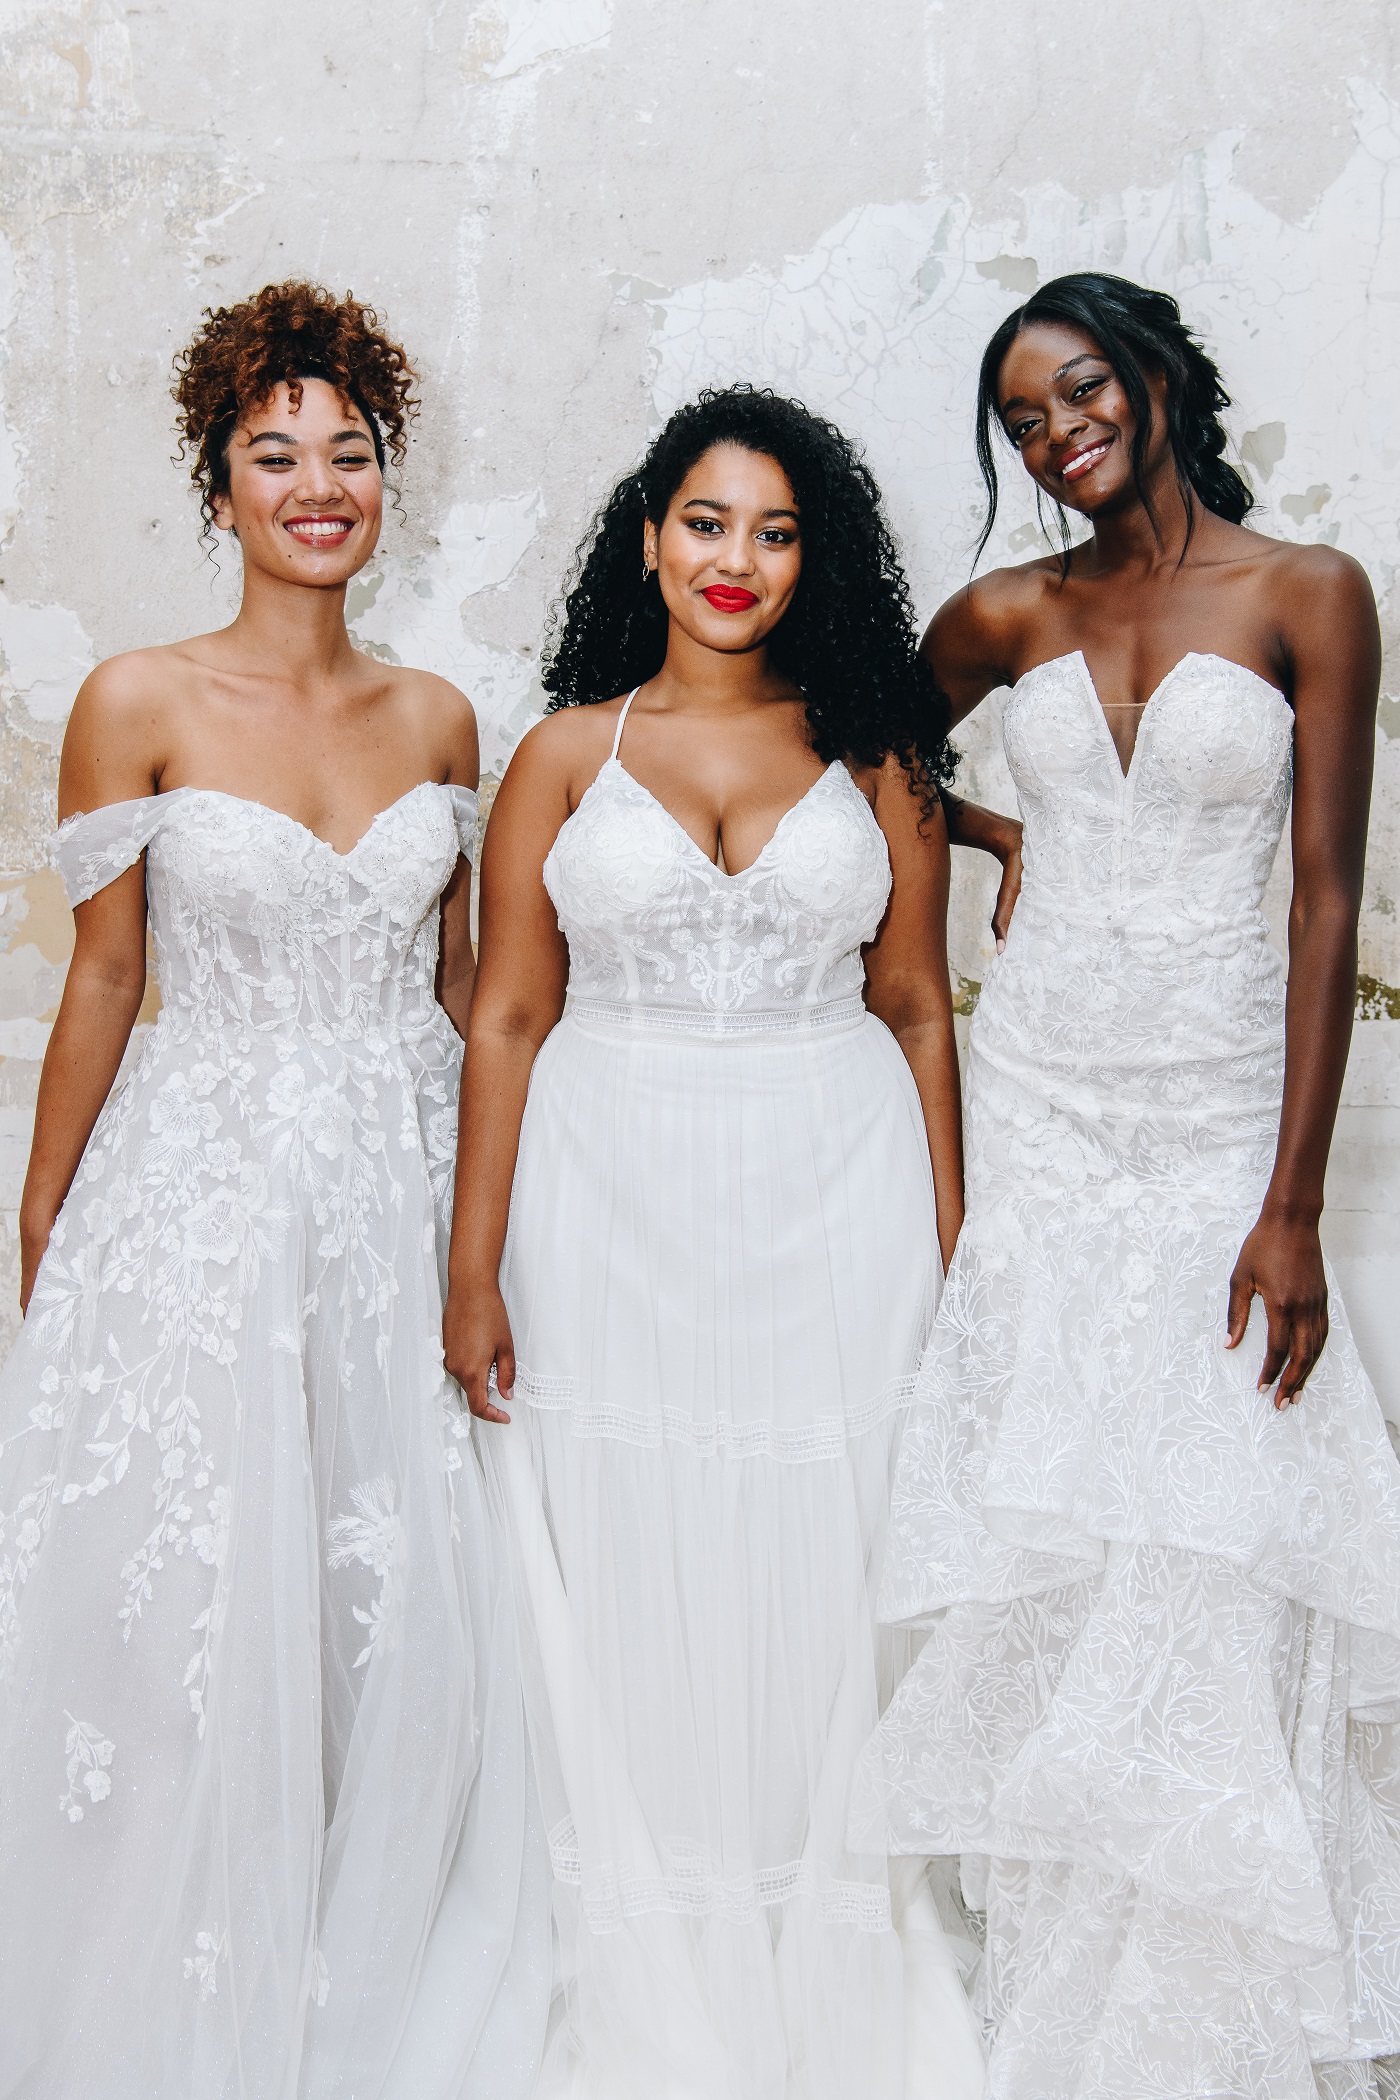 Brides in long corset wedding dresses